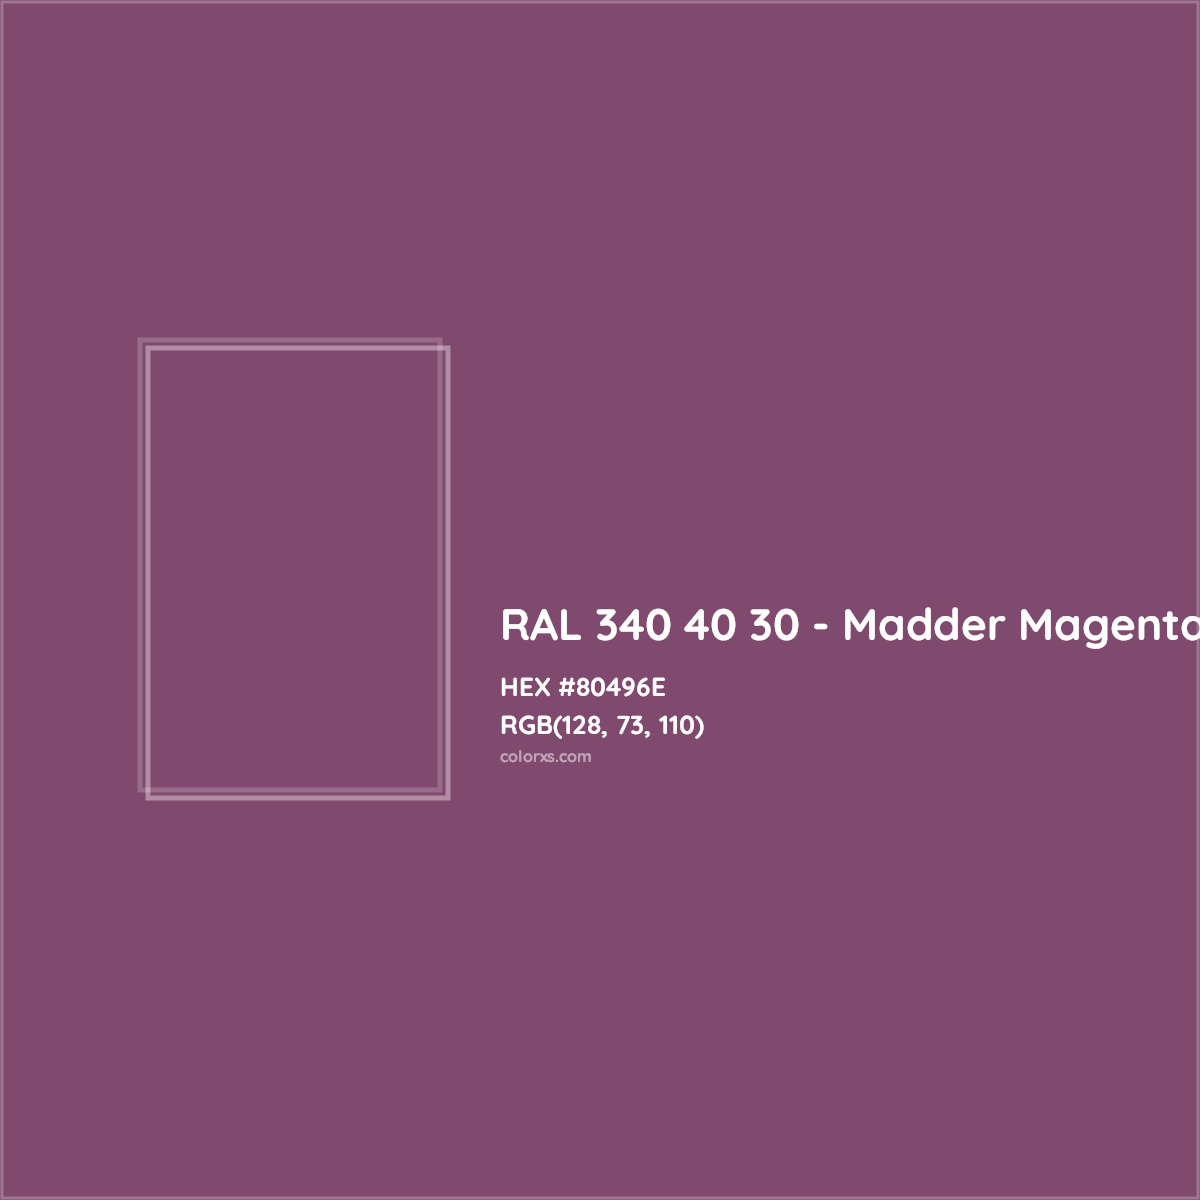 HEX #80496E RAL 340 40 30 - Madder Magenta CMS RAL Design - Color Code